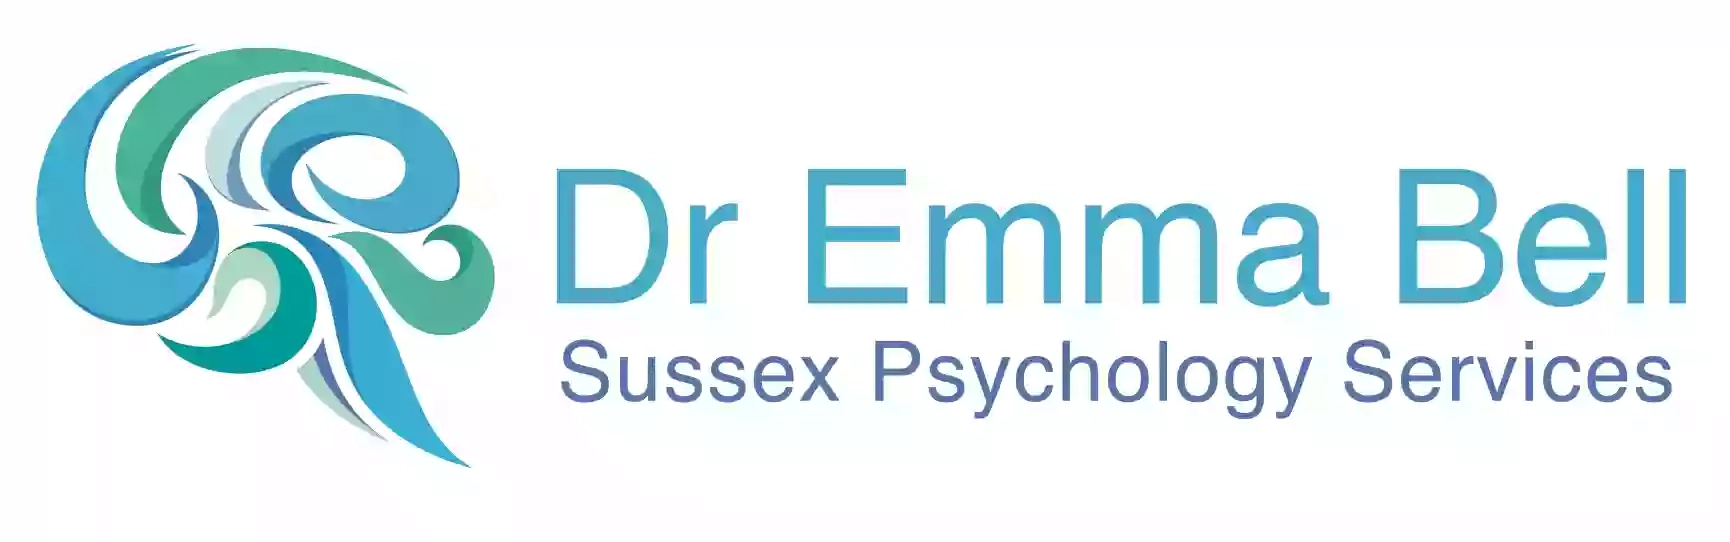 Sussex Psychology Services